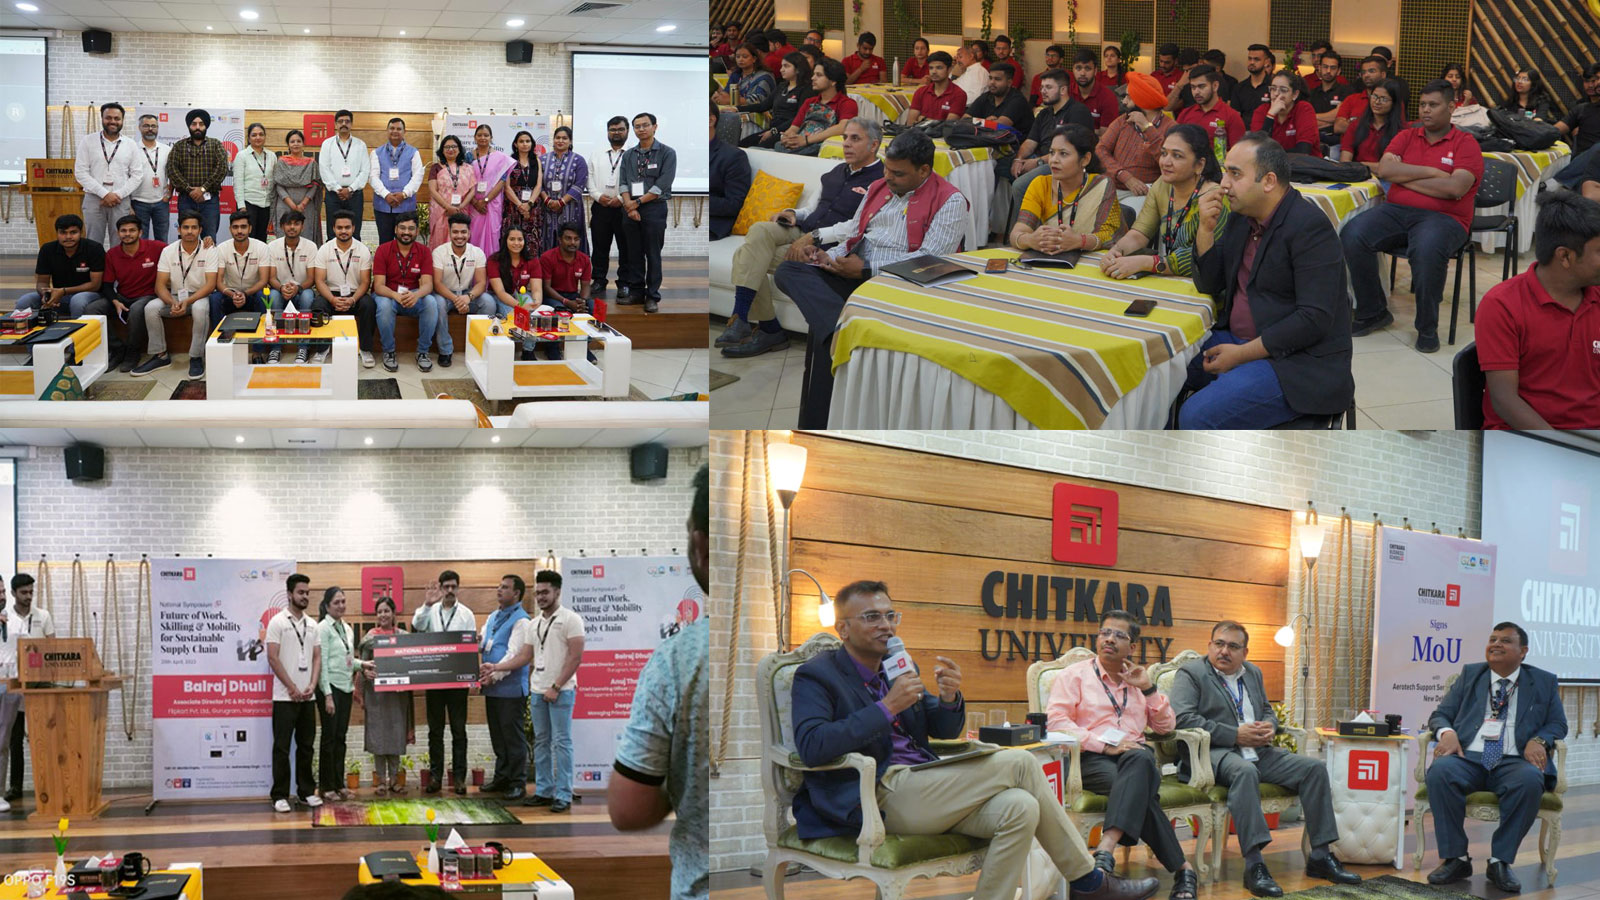 National symposium - Chitkara University